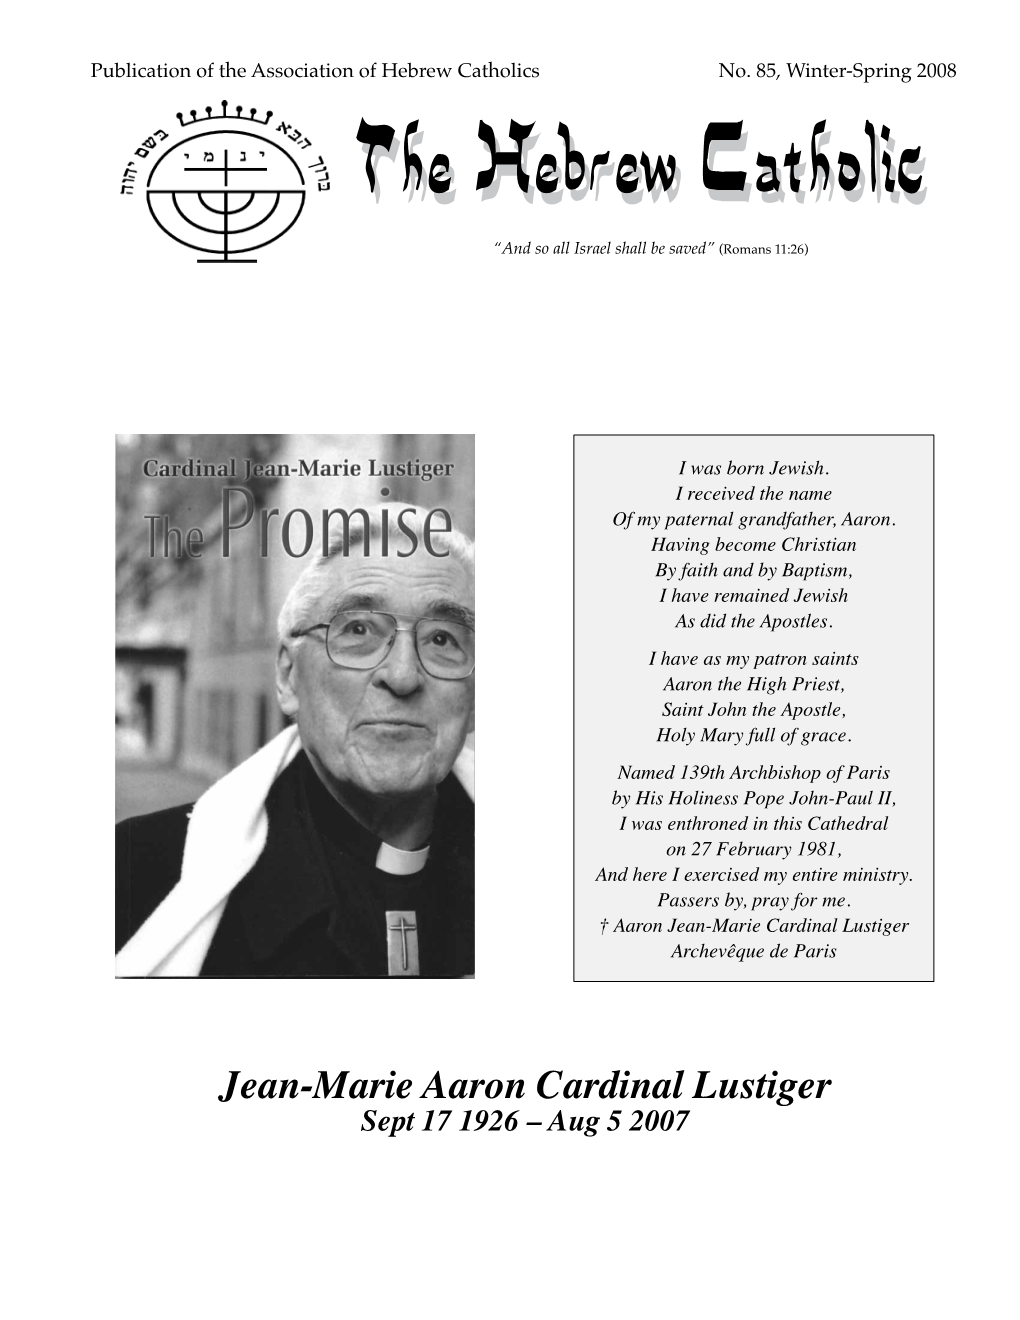 Jean-Marie Aaron Cardinal Lustiger